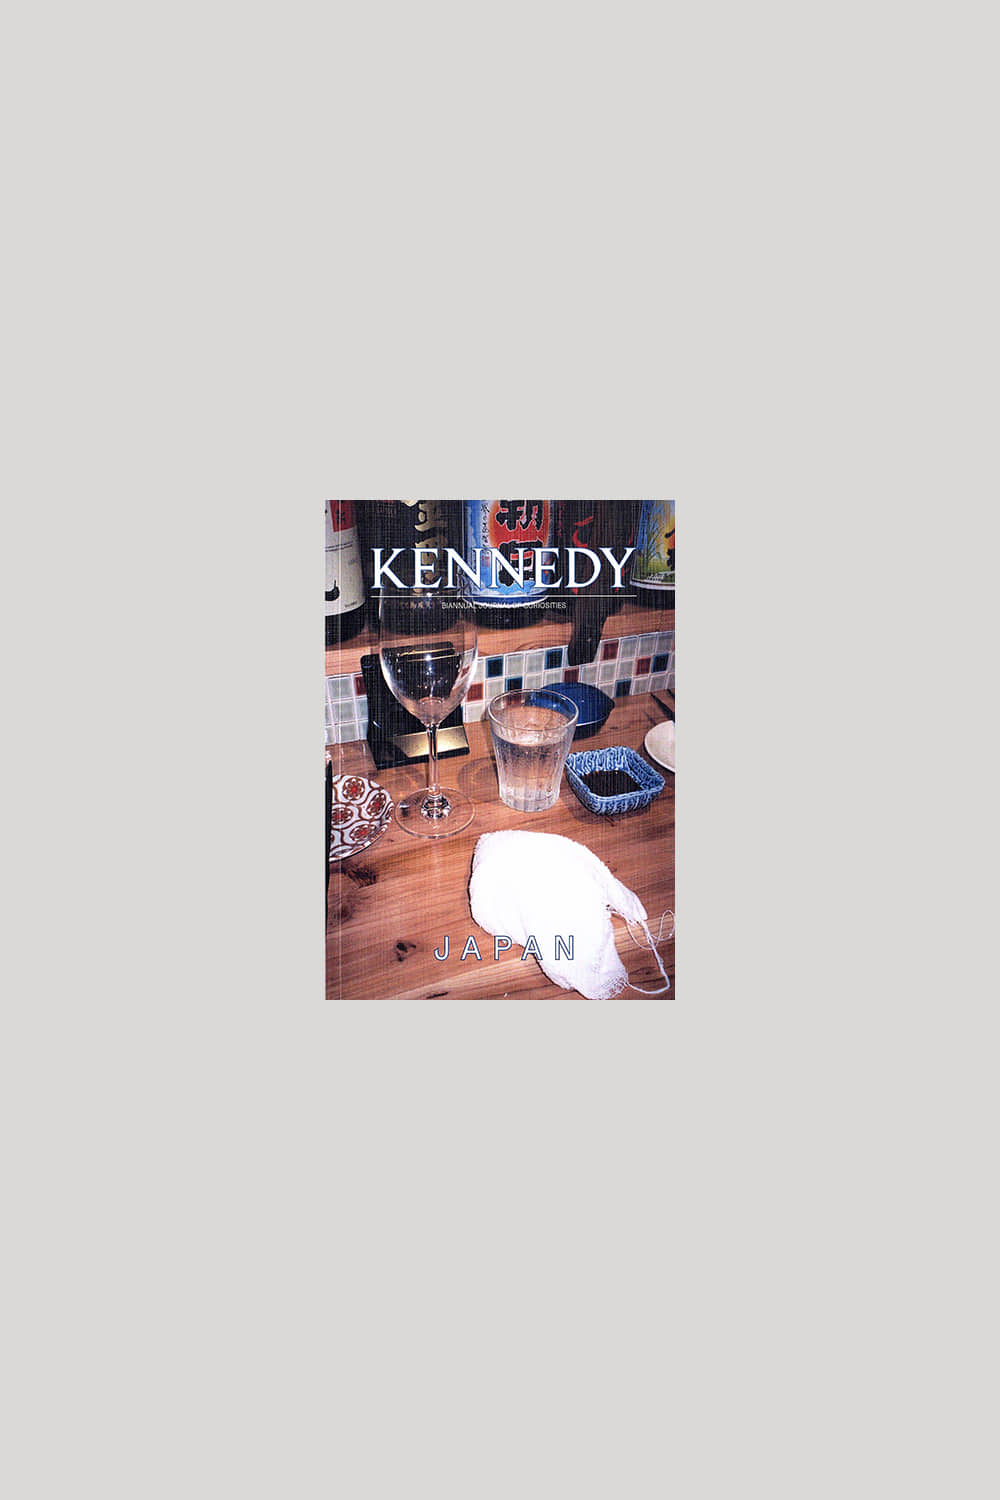 Kennedy - Issue 11 JAPAN 티셔츠, 워시드 헤비웨이트 티셔츠, 옥스포드셔츠, 버튼다운셔츠, 메신저백, 캔버스백